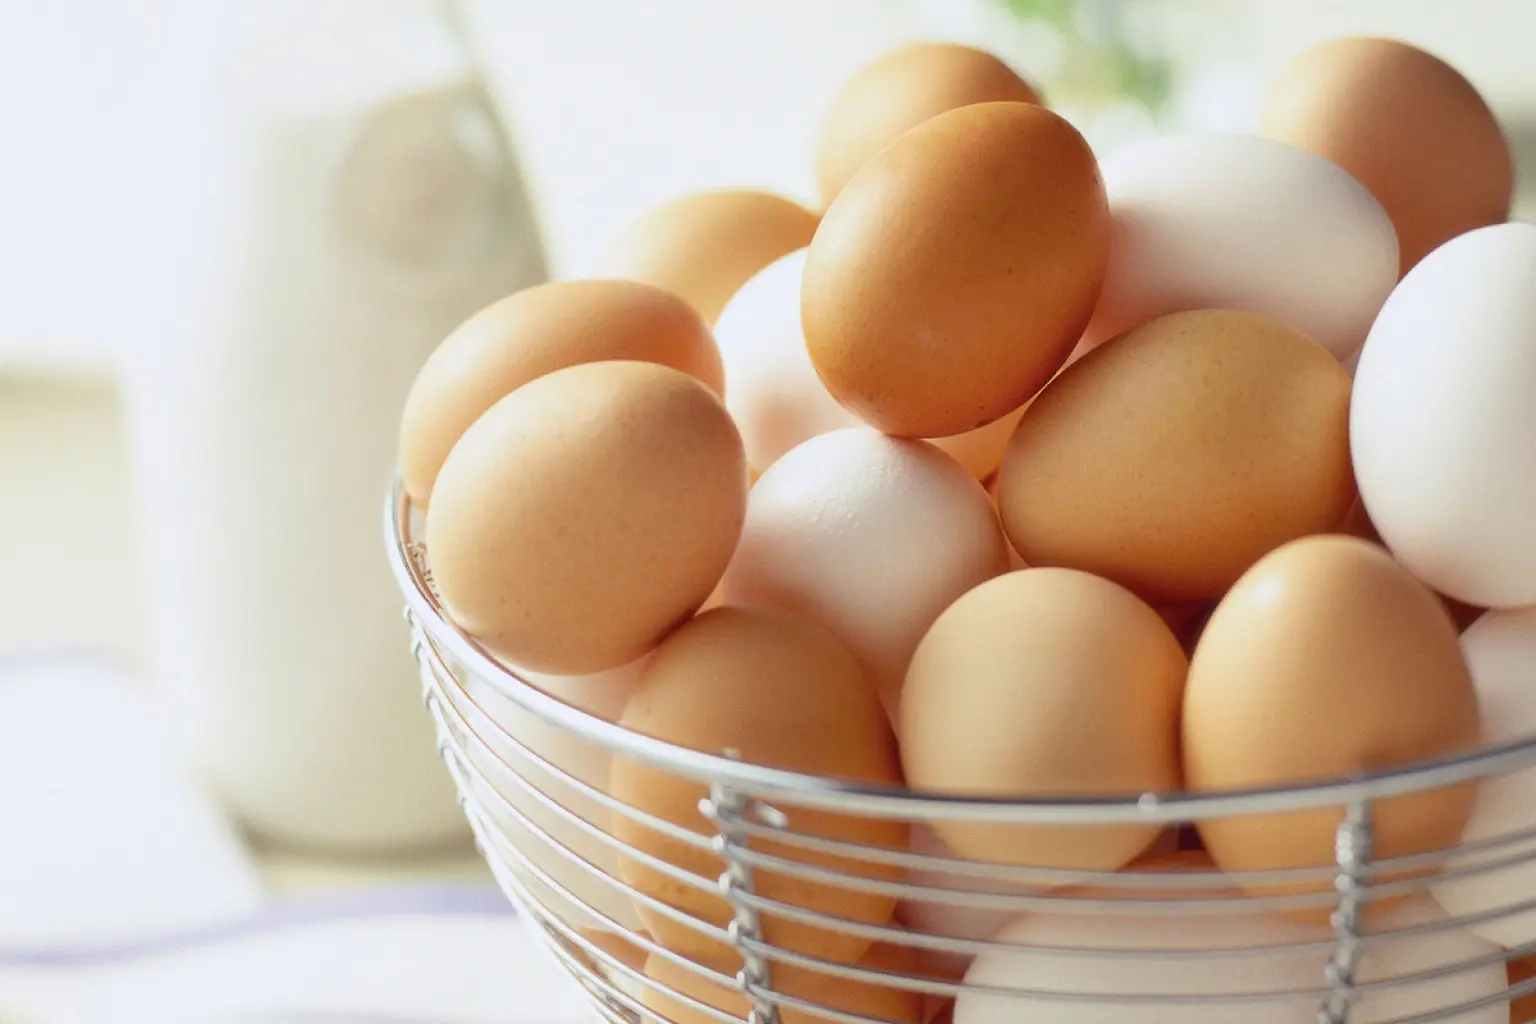 Berbahaya, sebaiknya kamu nggak mencuci telur sebelum disimpan. Simak alasannya di sini! (Sumber Foto: Alamy/Huffington Post)